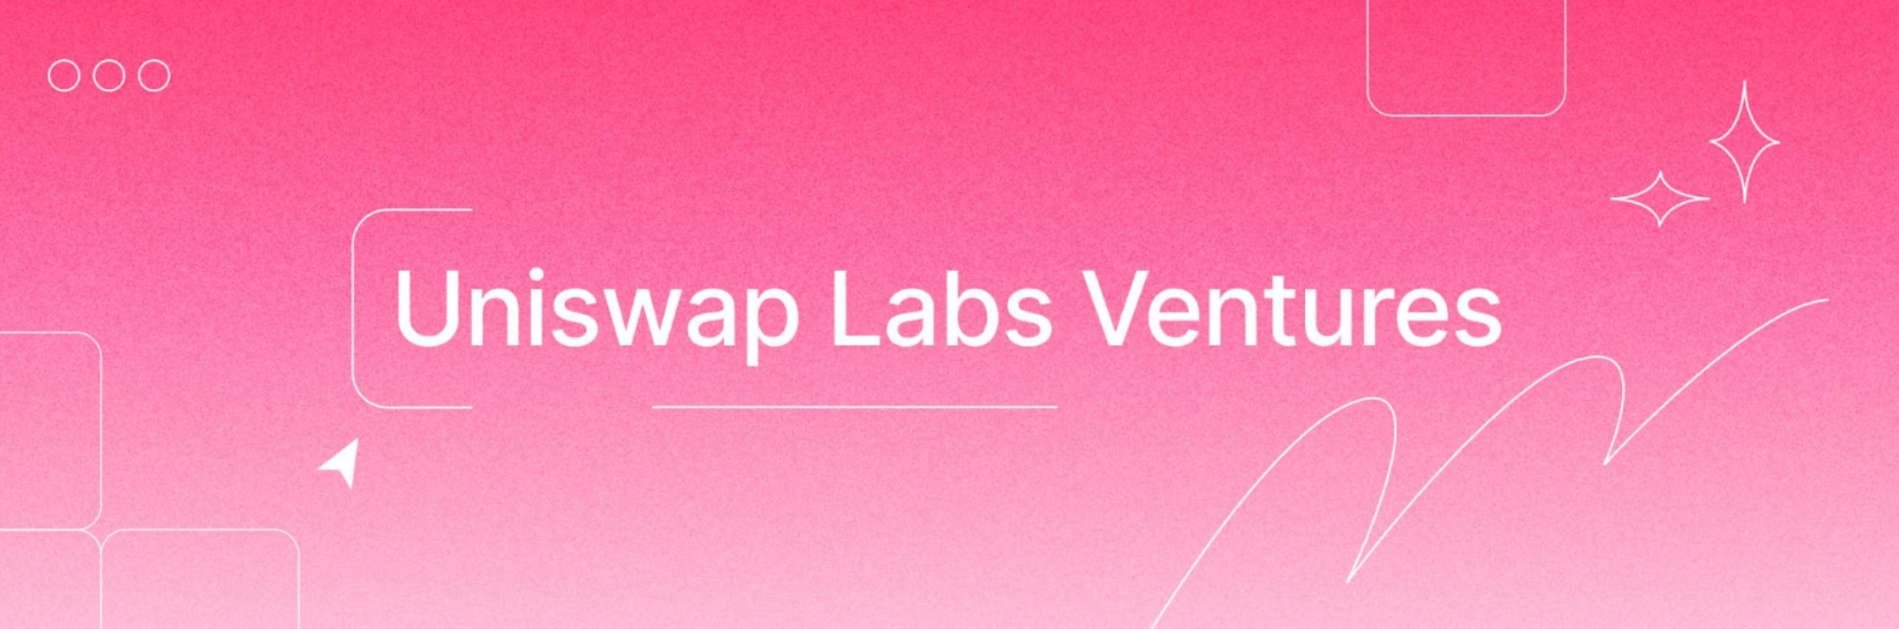 Uniswap Launches Website Integration in Bid for Web3 Dominance